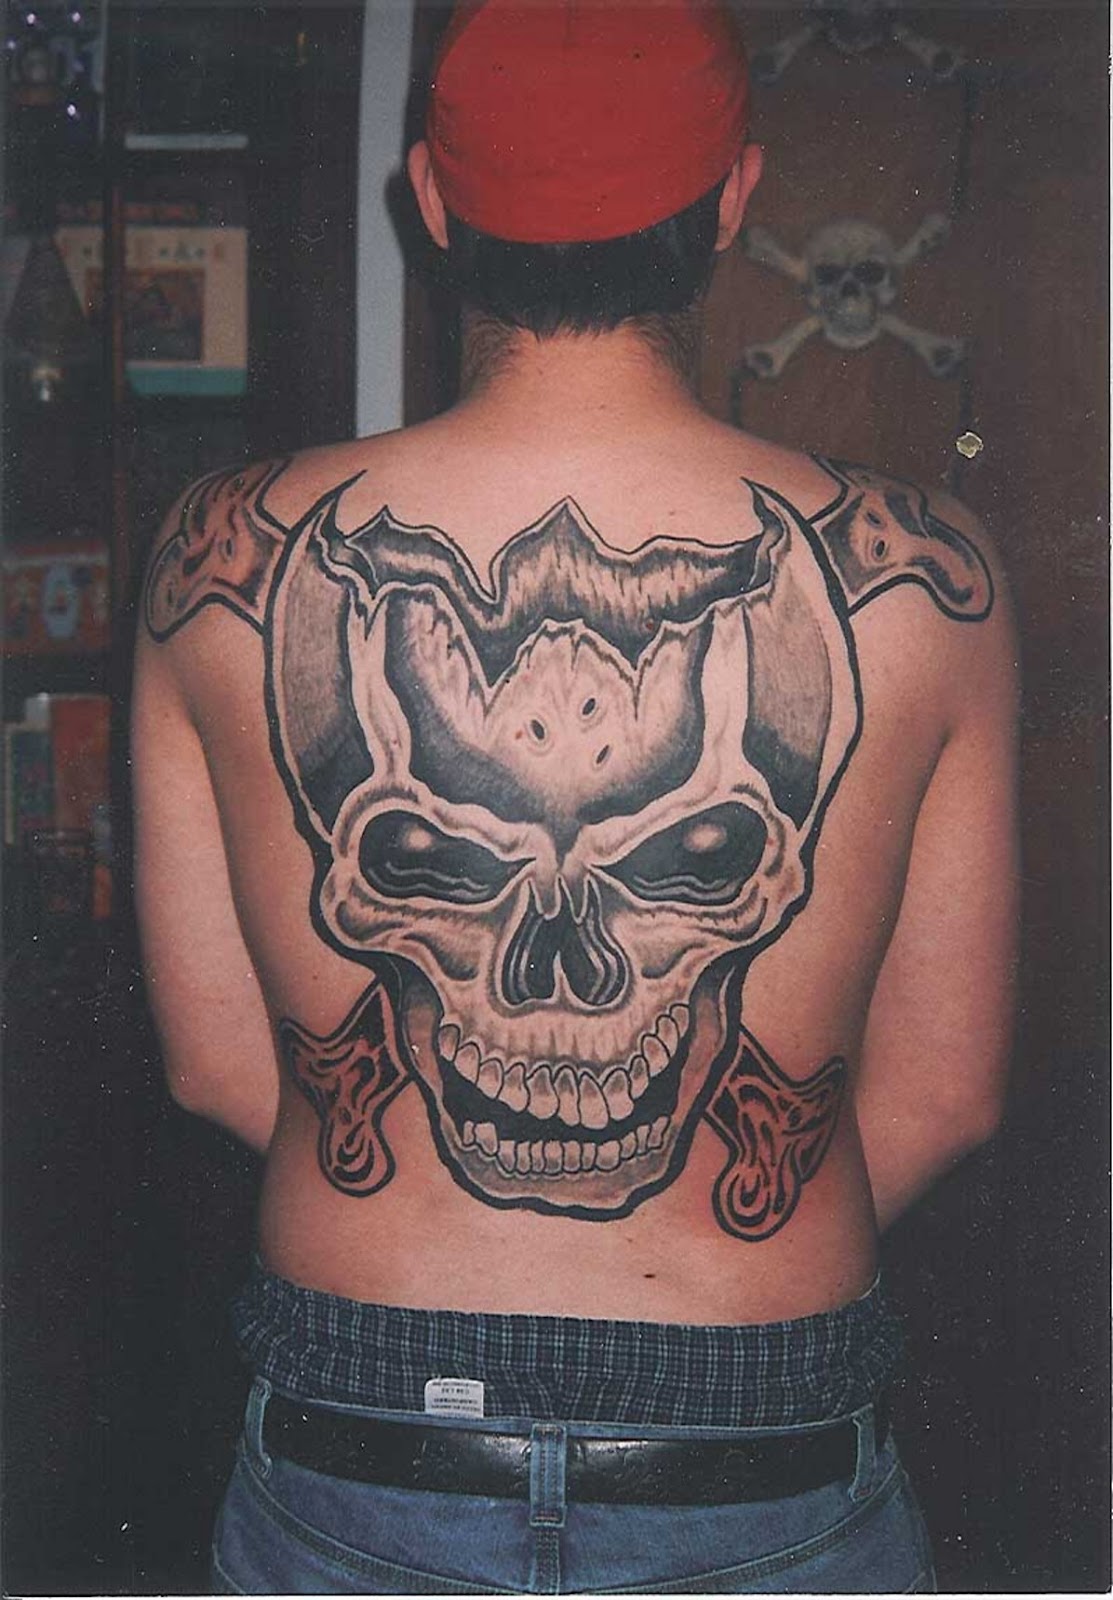 http://4.bp.blogspot.com/-yvh6aRQXMTE/TzvdngdNaRI/AAAAAAAABRE/p_0QRBGC_fY/s1600/skull-tattoos-on-back-1530.jpg